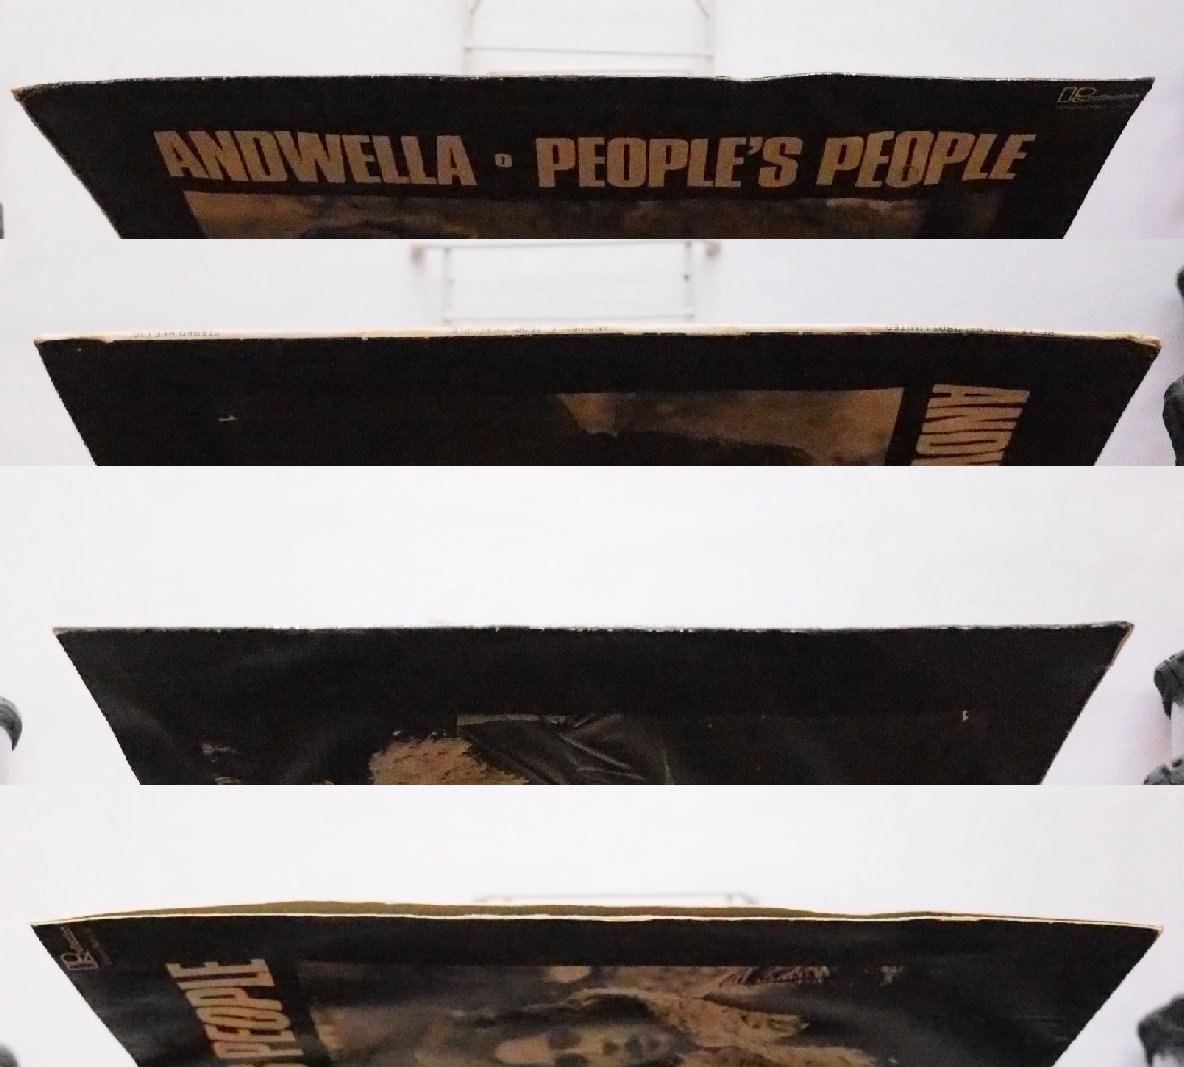 Andwella / People's People (UK) β